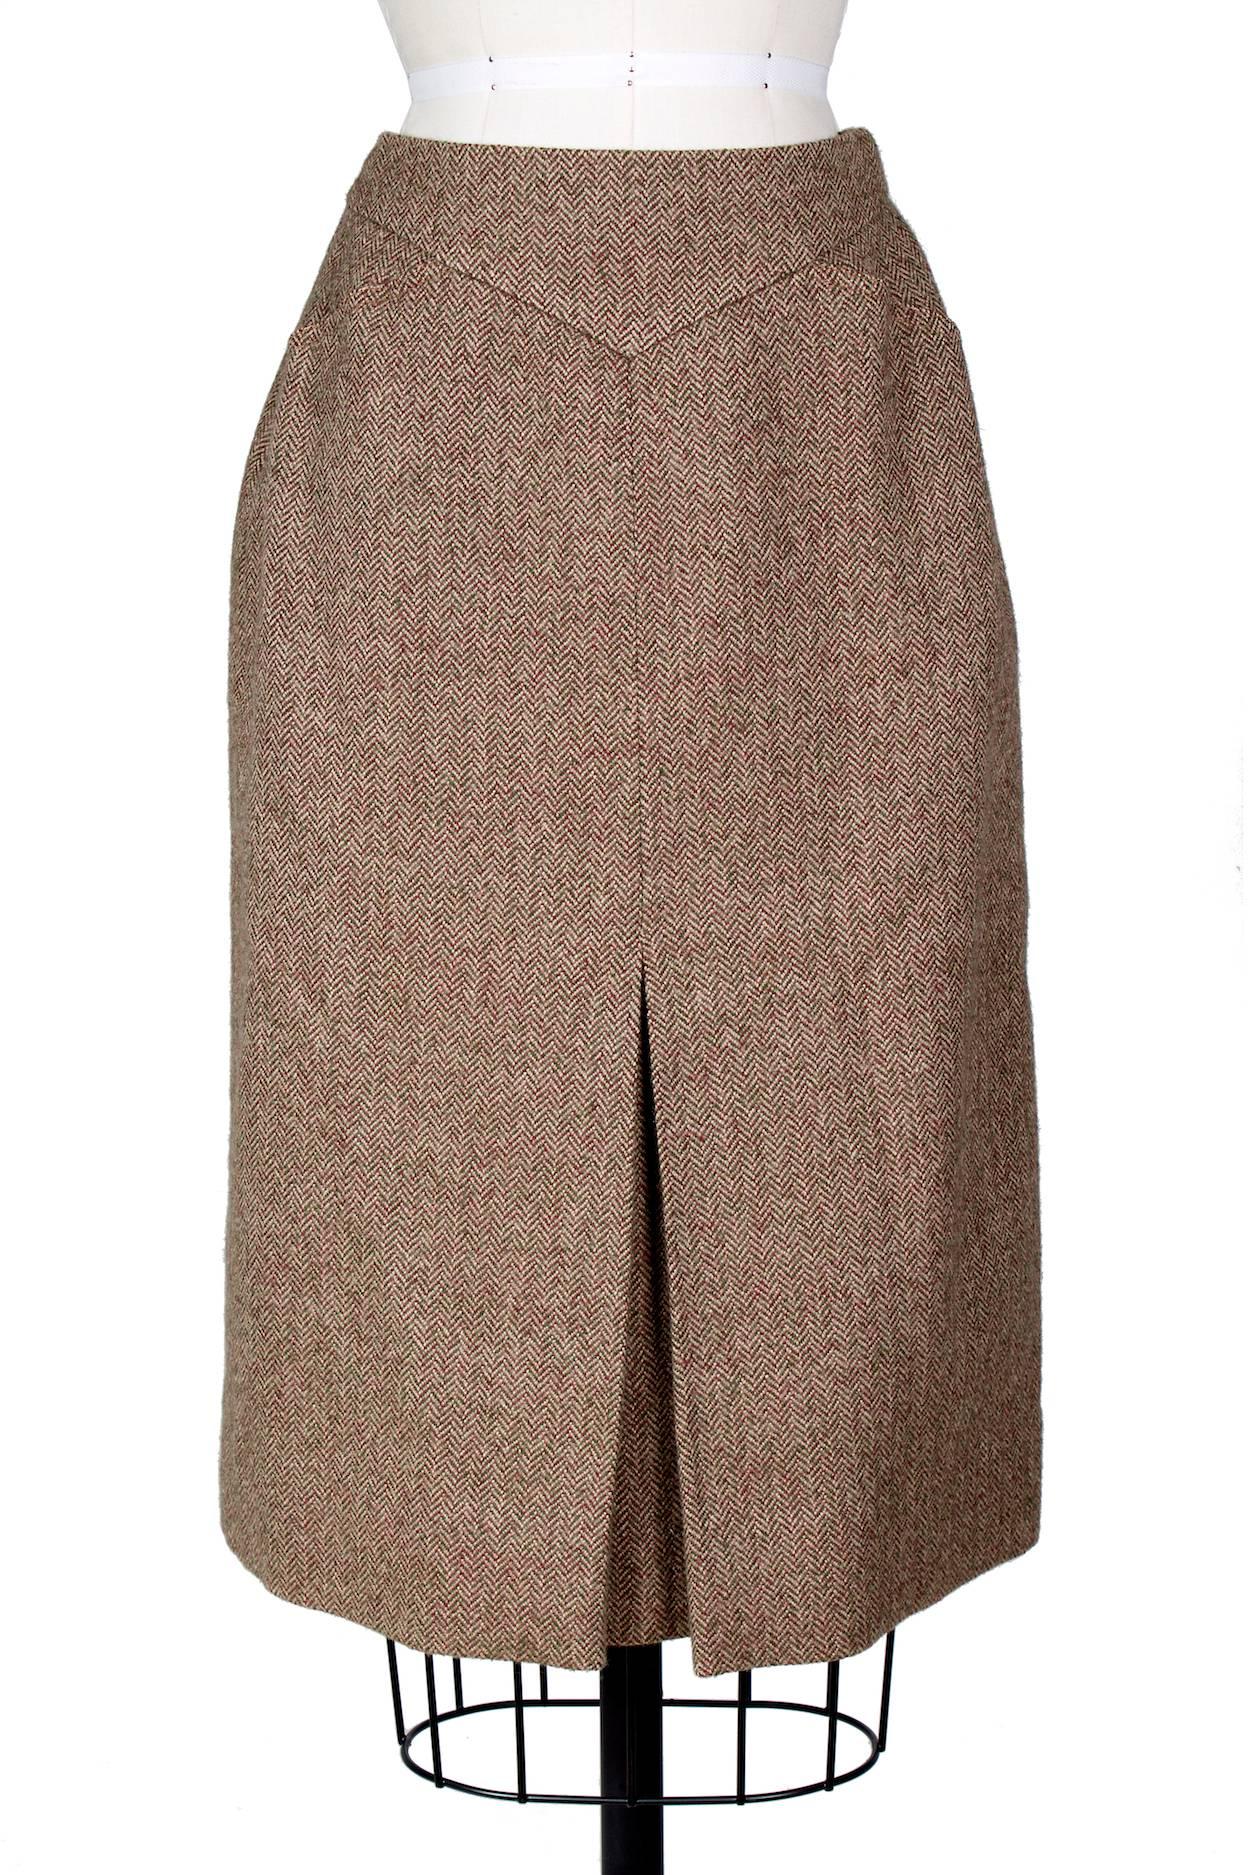 Women's Jean Patou 3 Piece Wool Tweed Skirt Suit circa 1950s